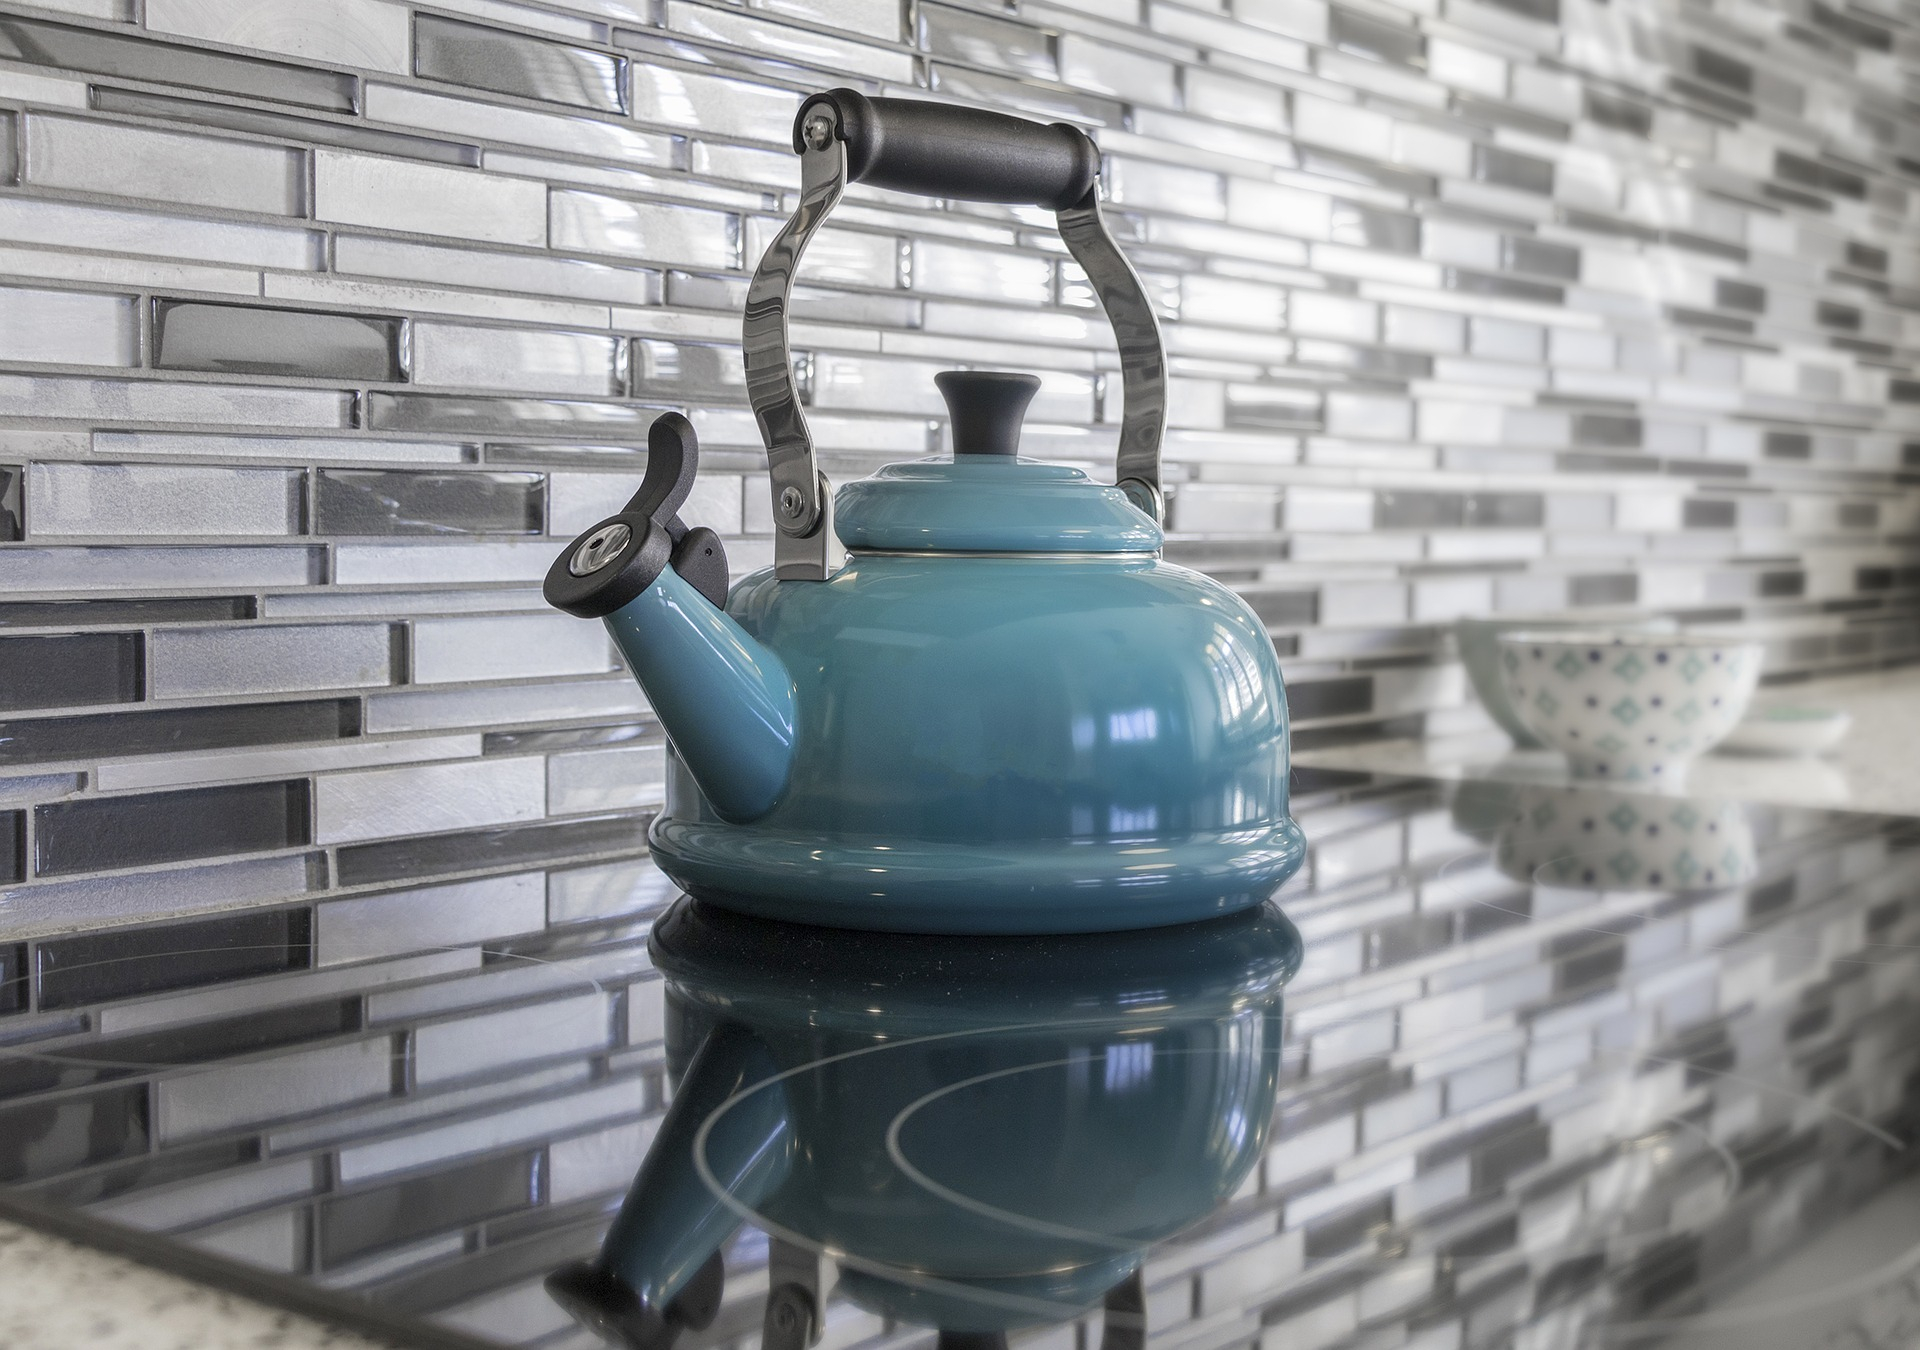 A kitchen stovetop with a blue tile backsplash